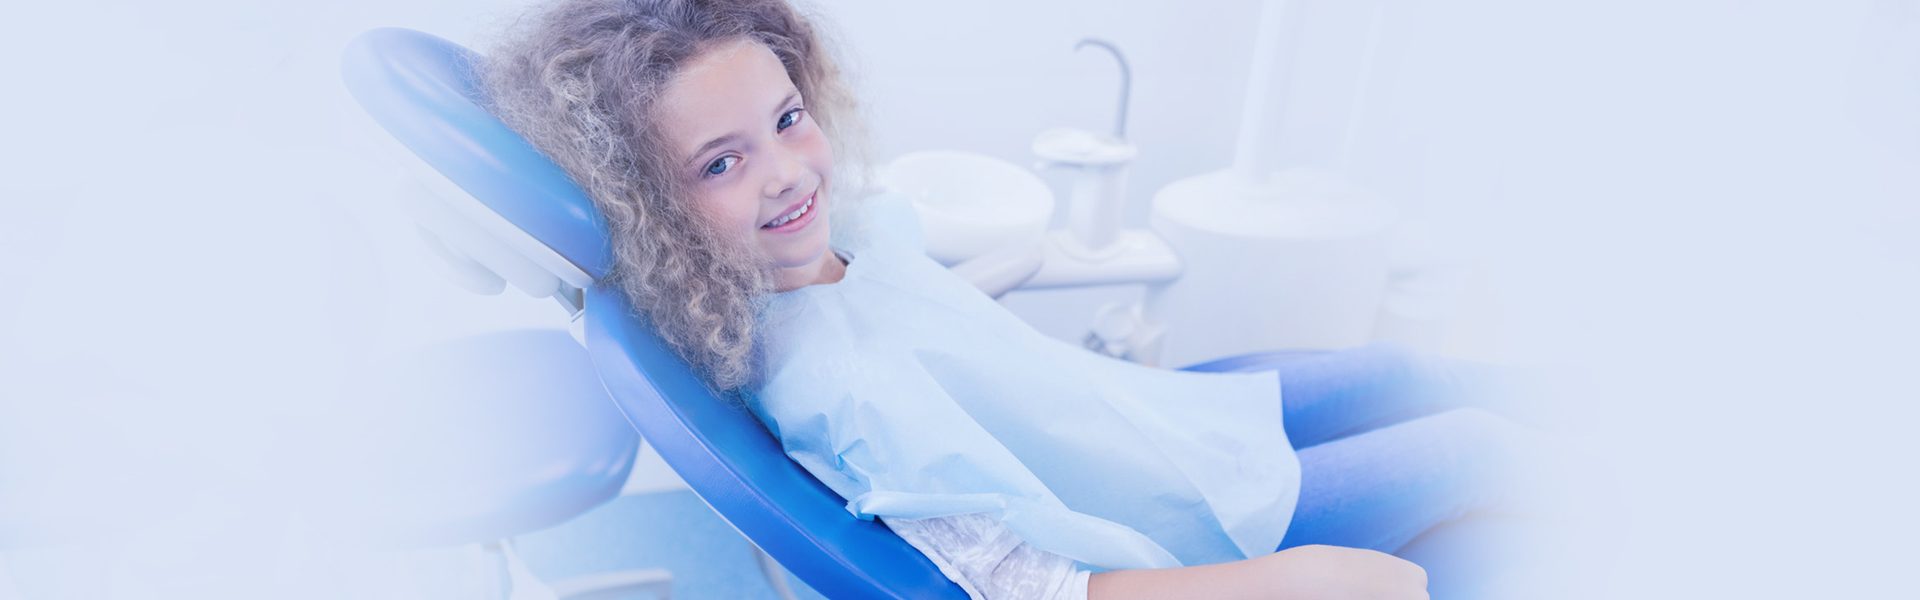 Dental Sealants Protect Your Kid’s Teeth